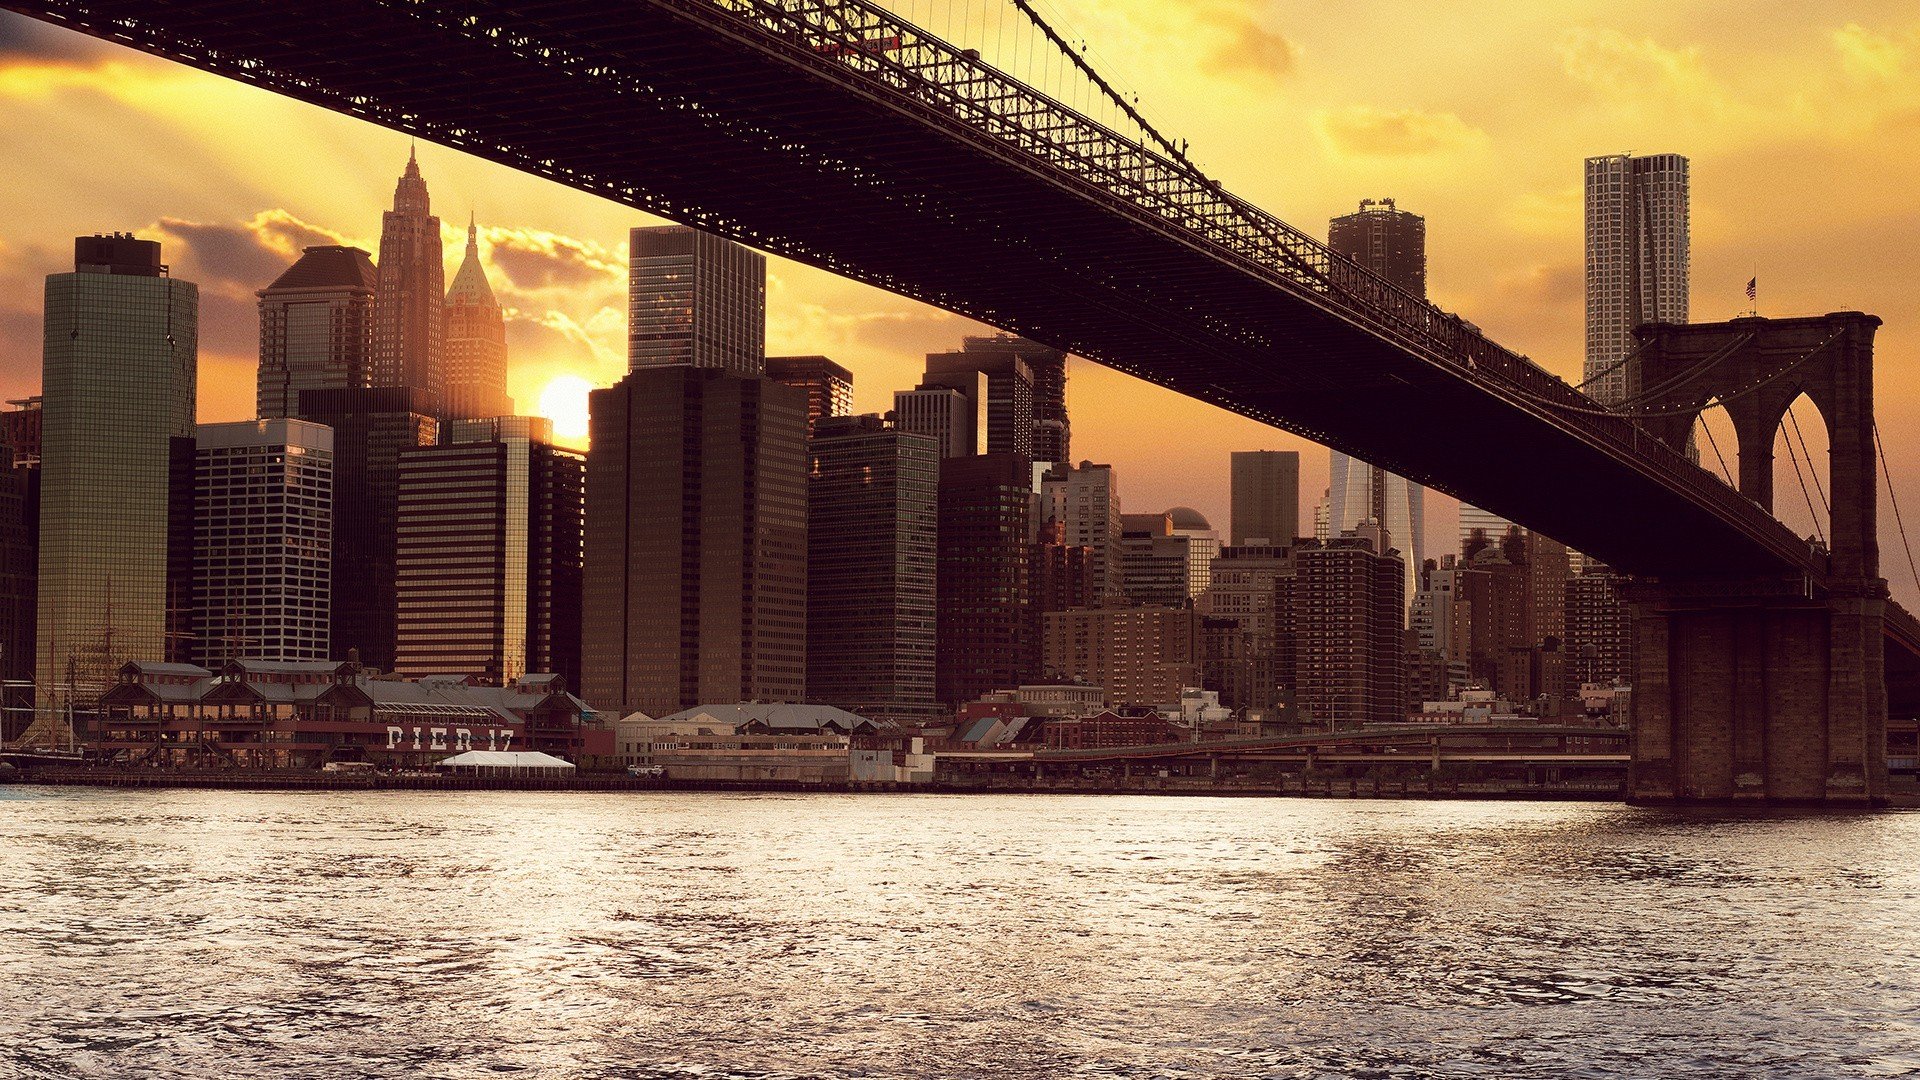 нью-йорк закат бруклинский мост солнце здания